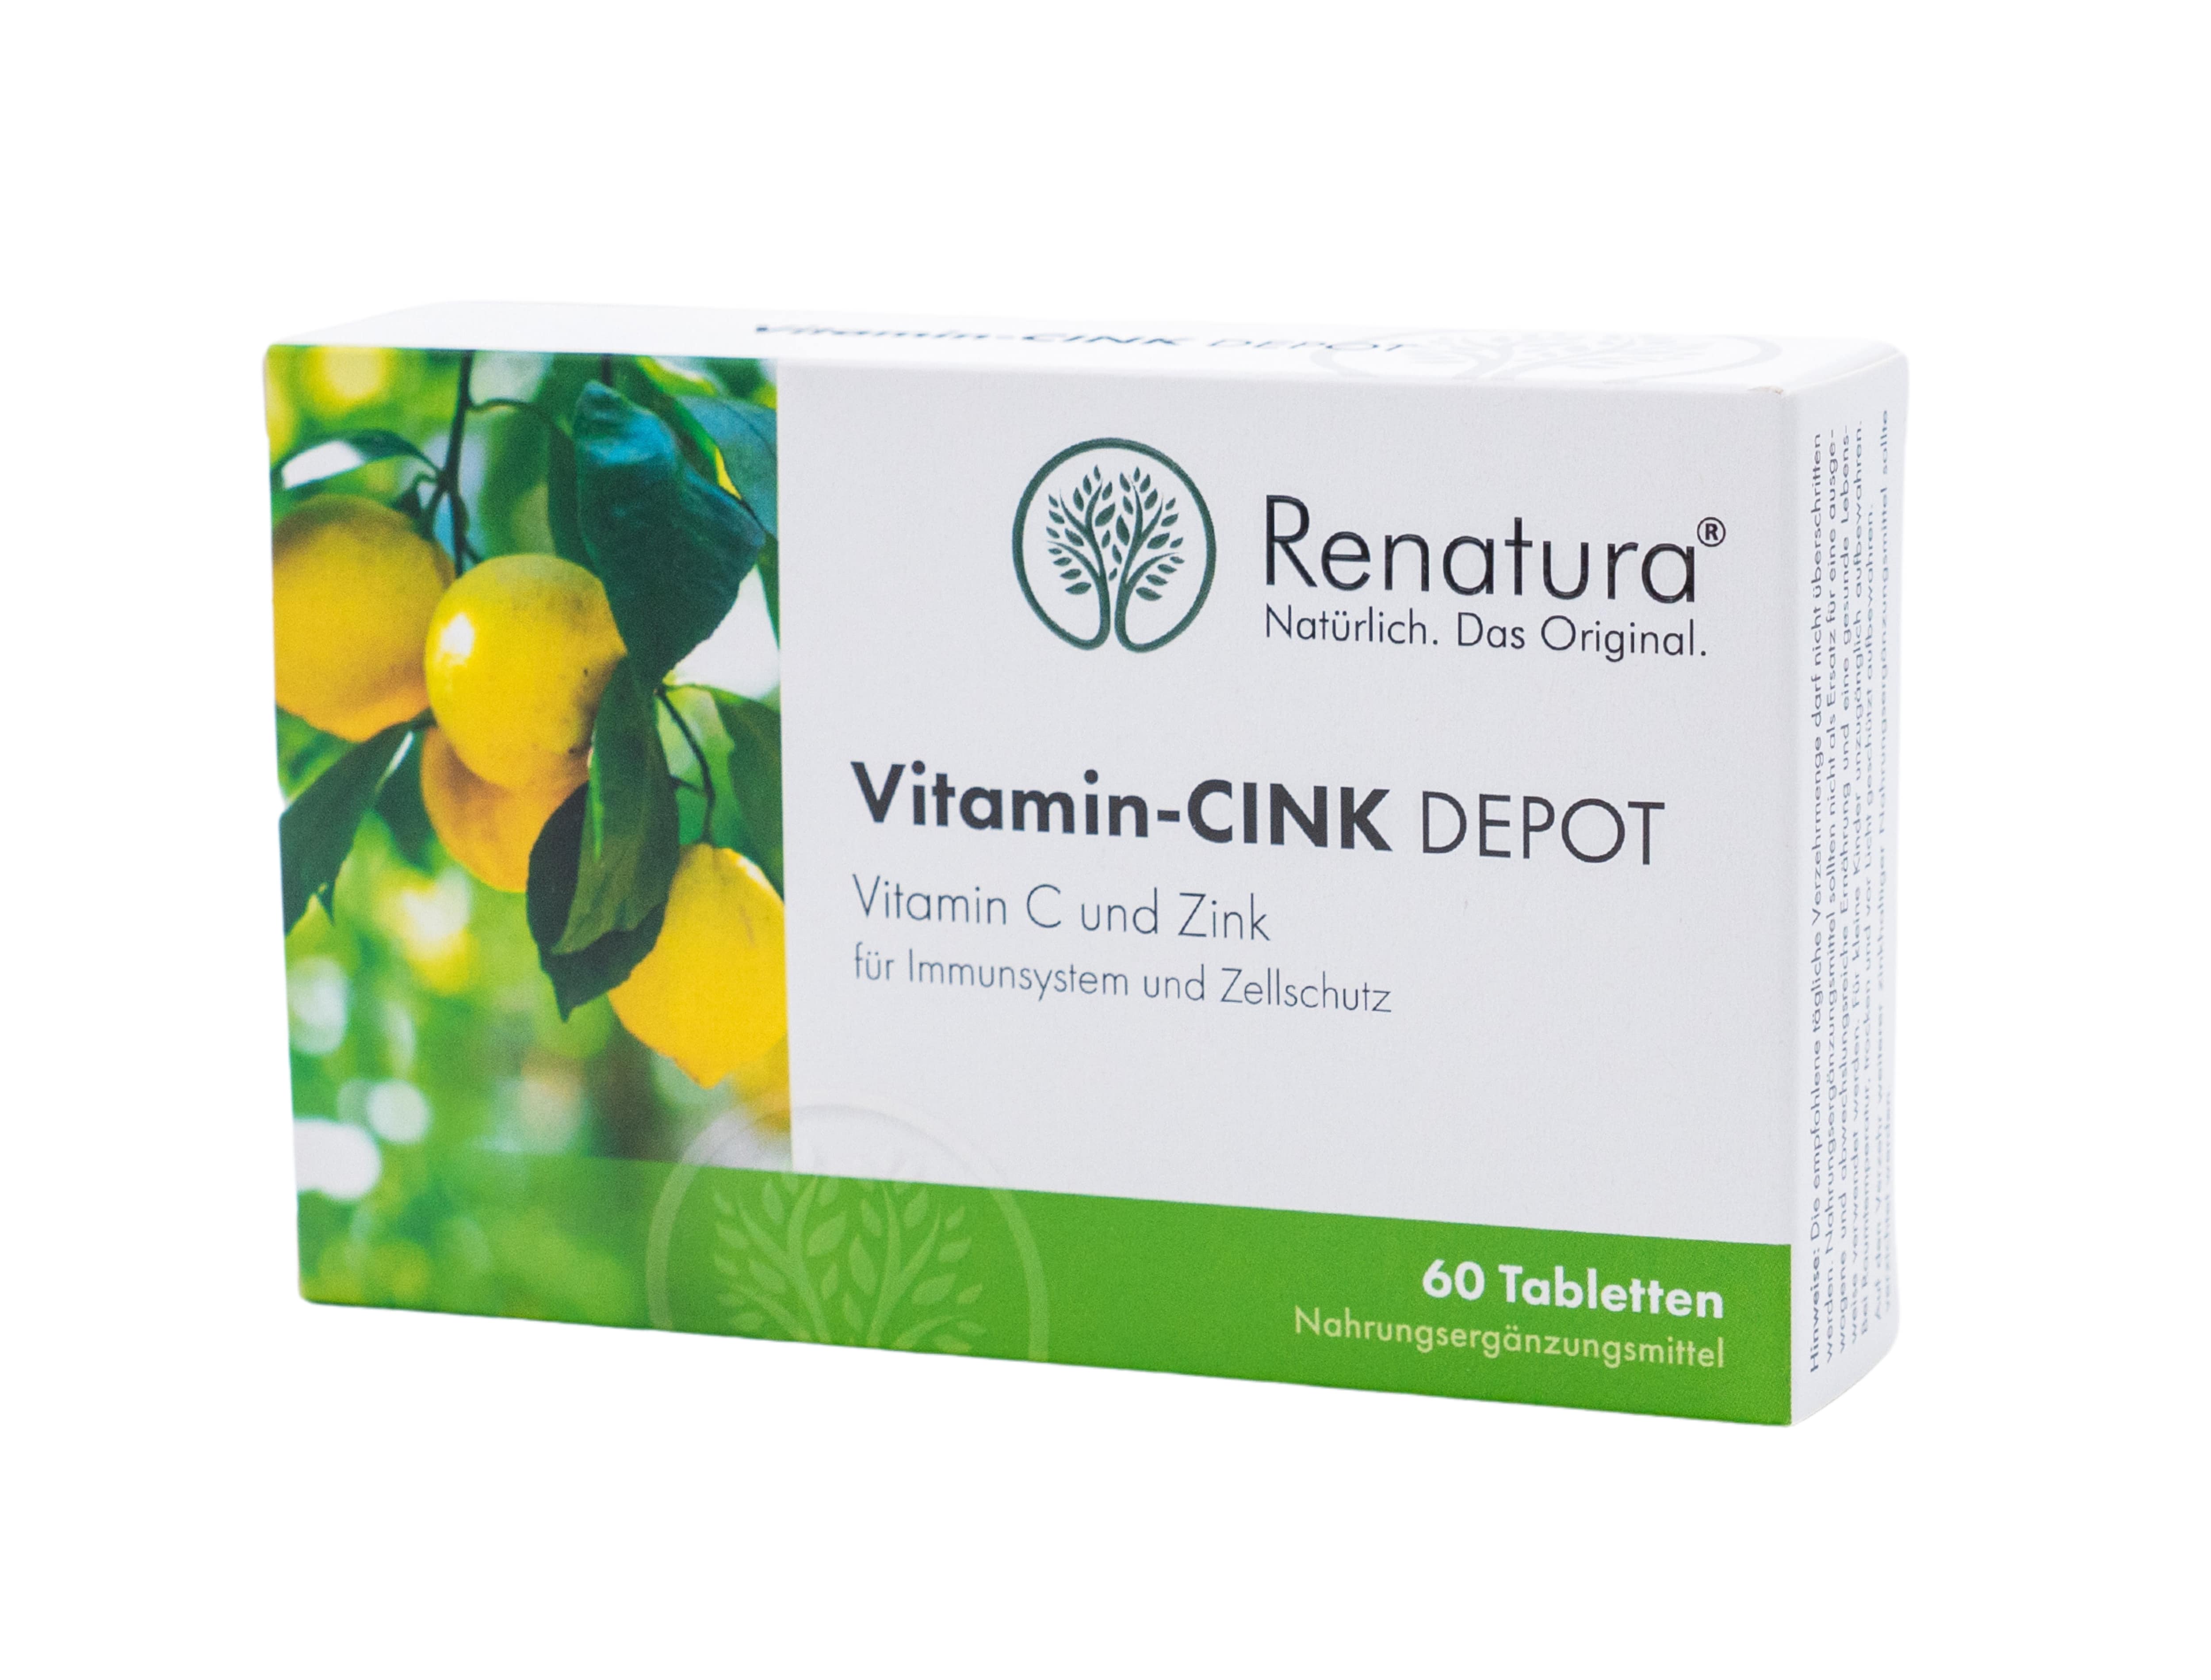 Vitamin - CINK DEPOT